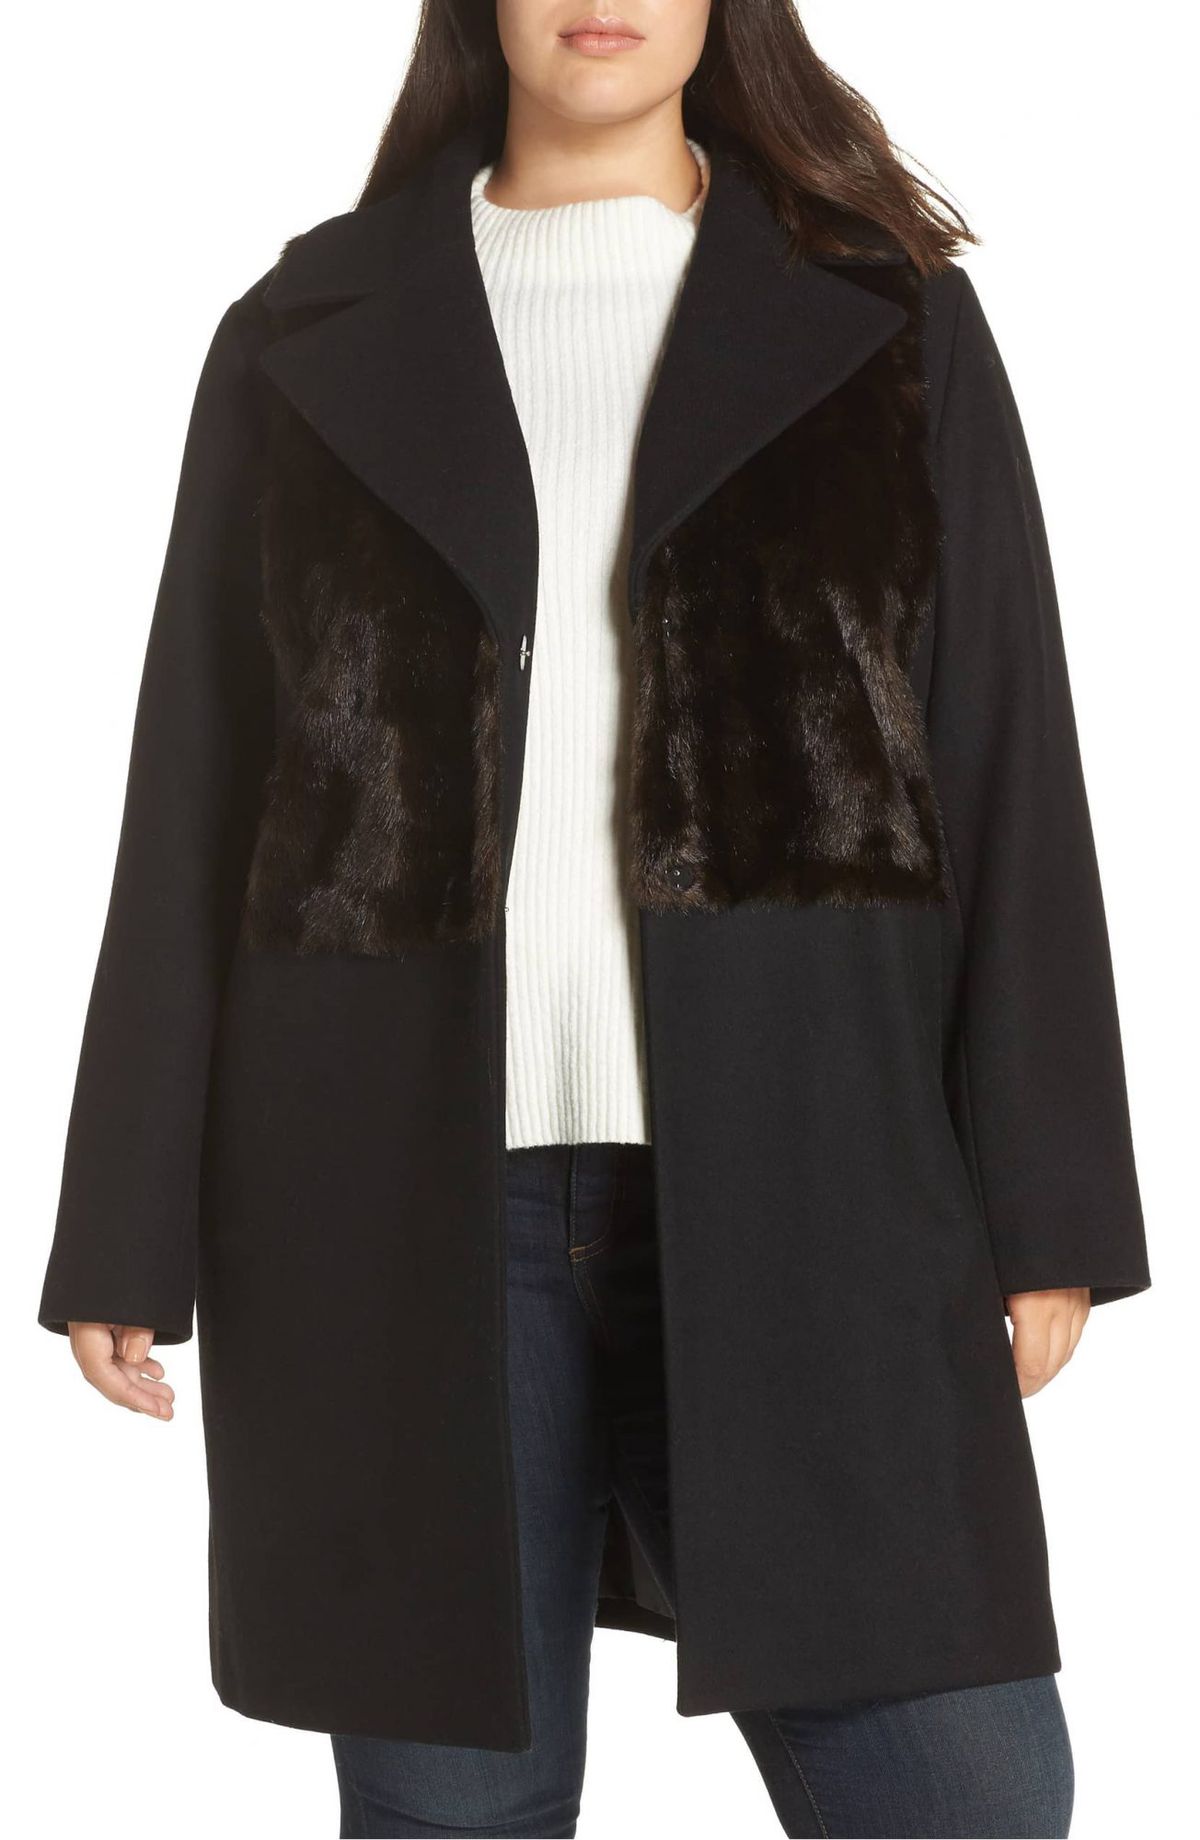 Rachel Rachel Roy Faux Fur Paneled Wool Blend Coat